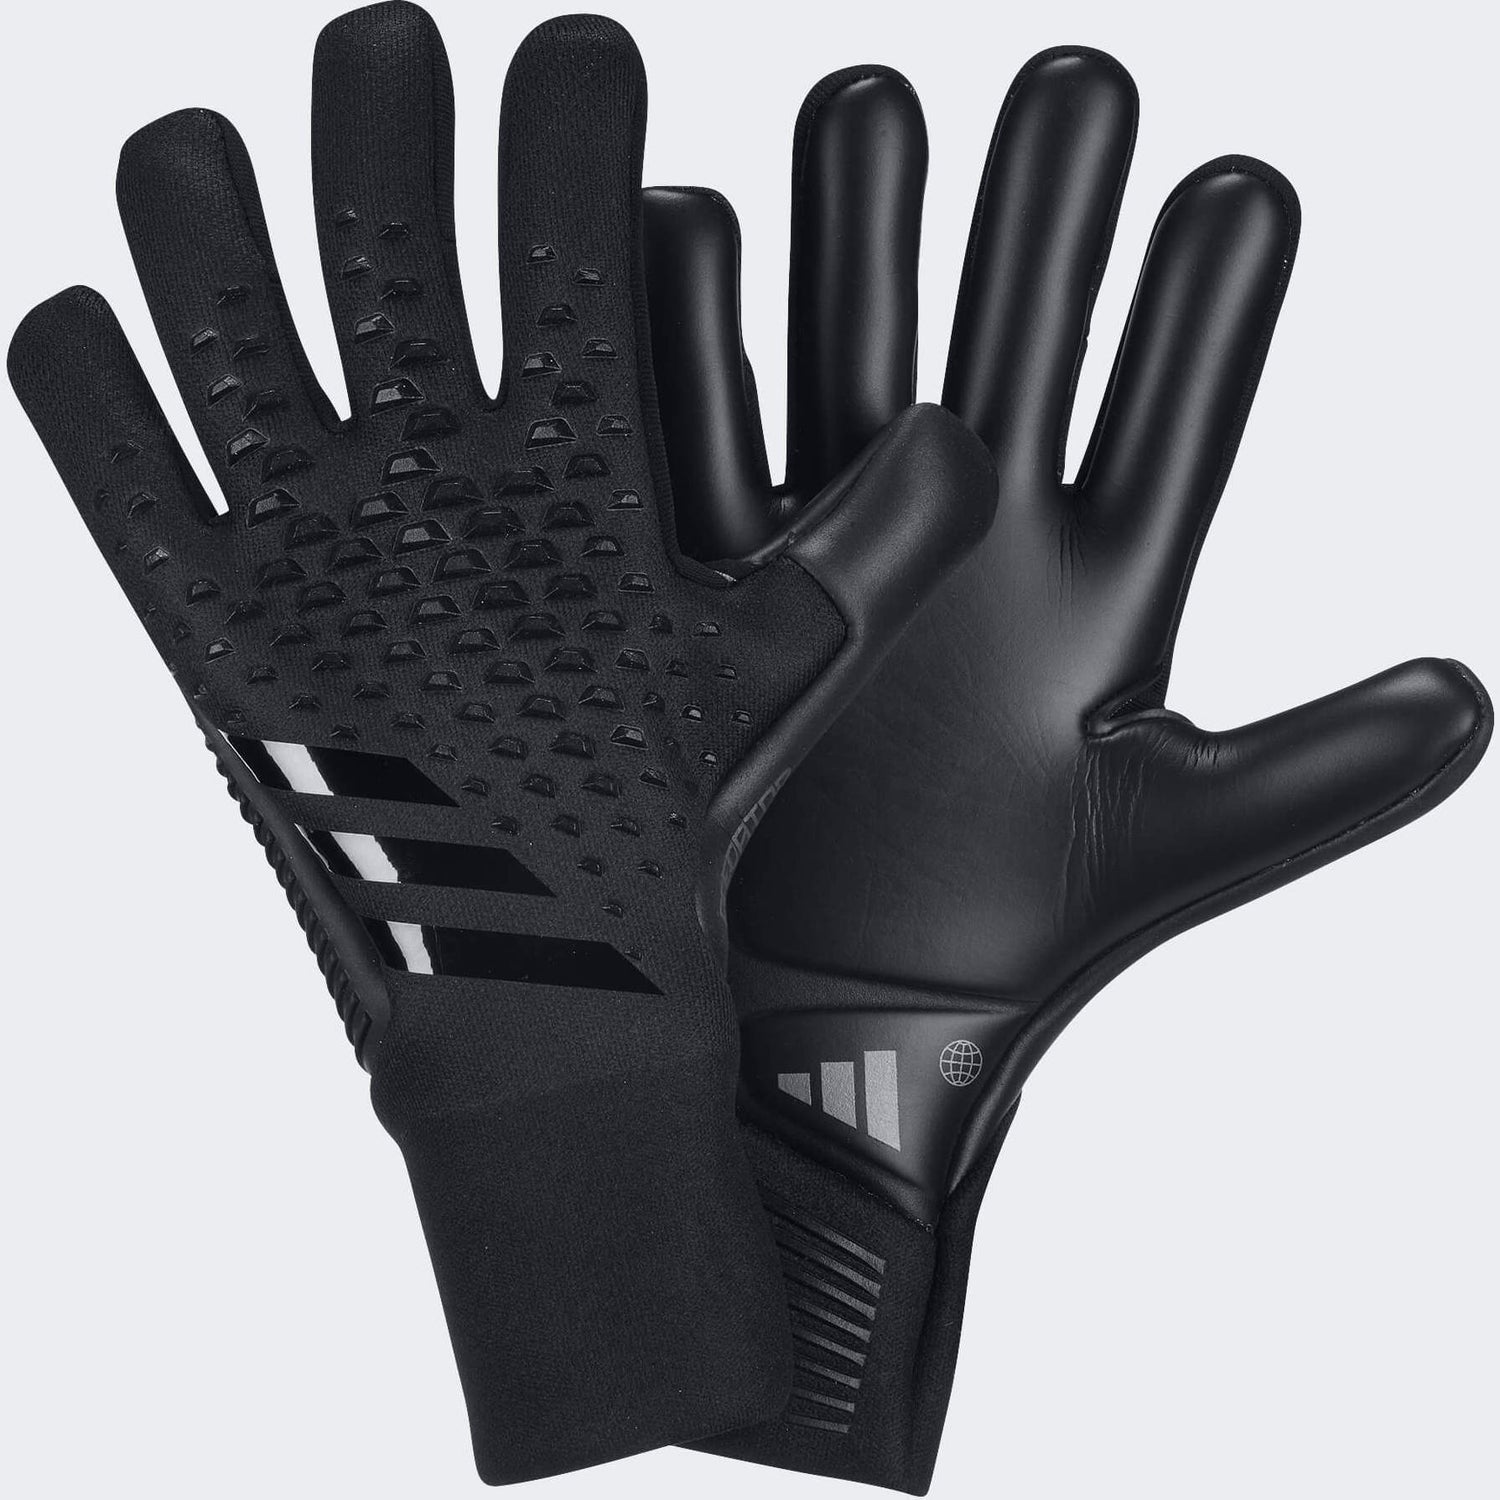 Predator GL Pro Gloves - Black